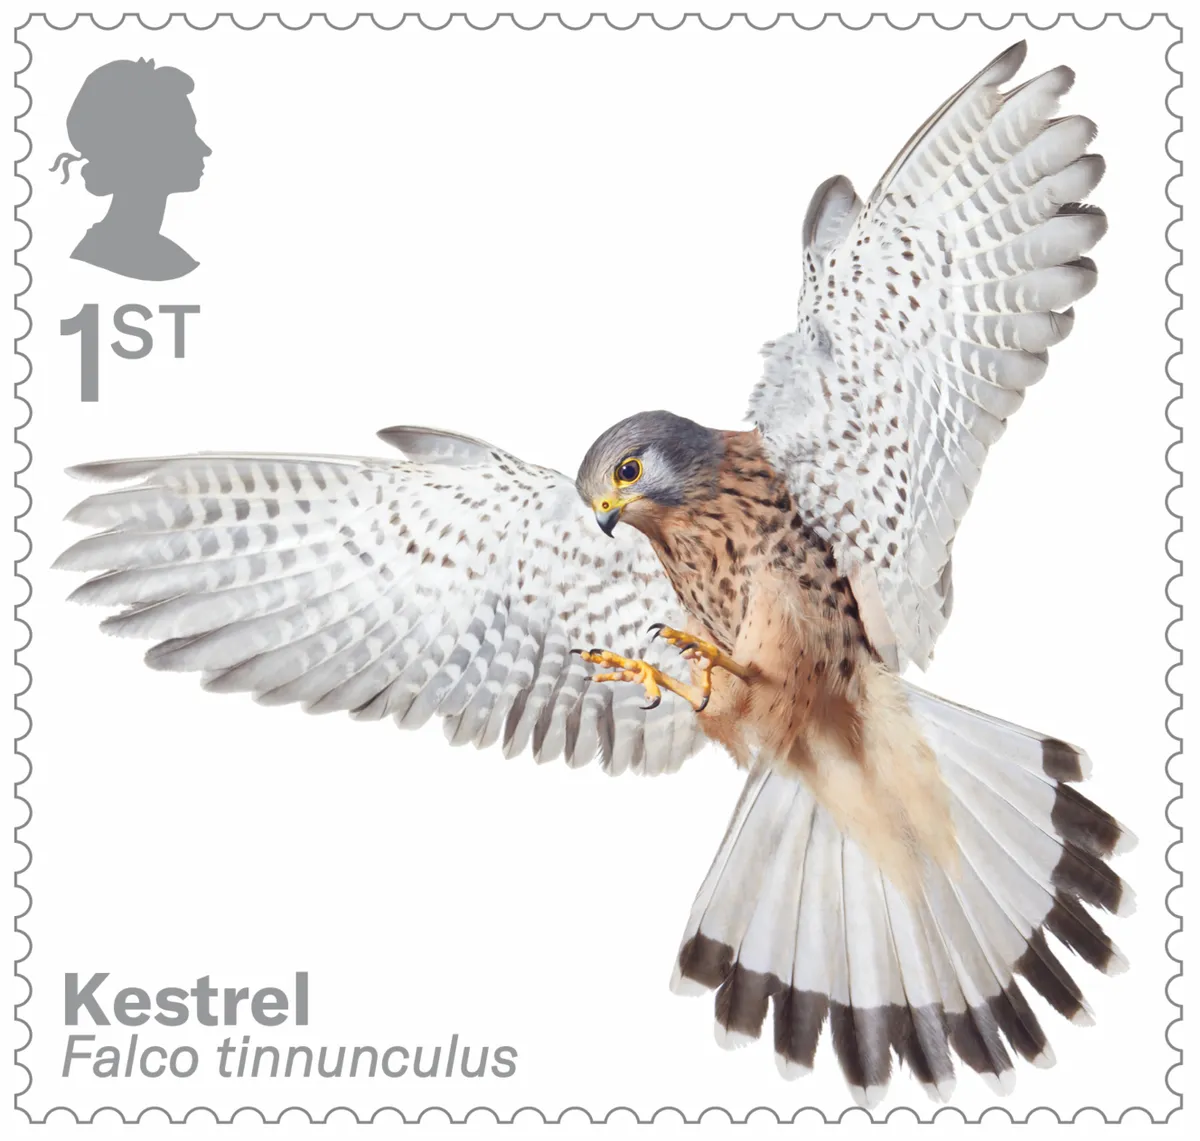 Bird of prey stamp collection - kestrel. © Tim Flach/Royal Mail.